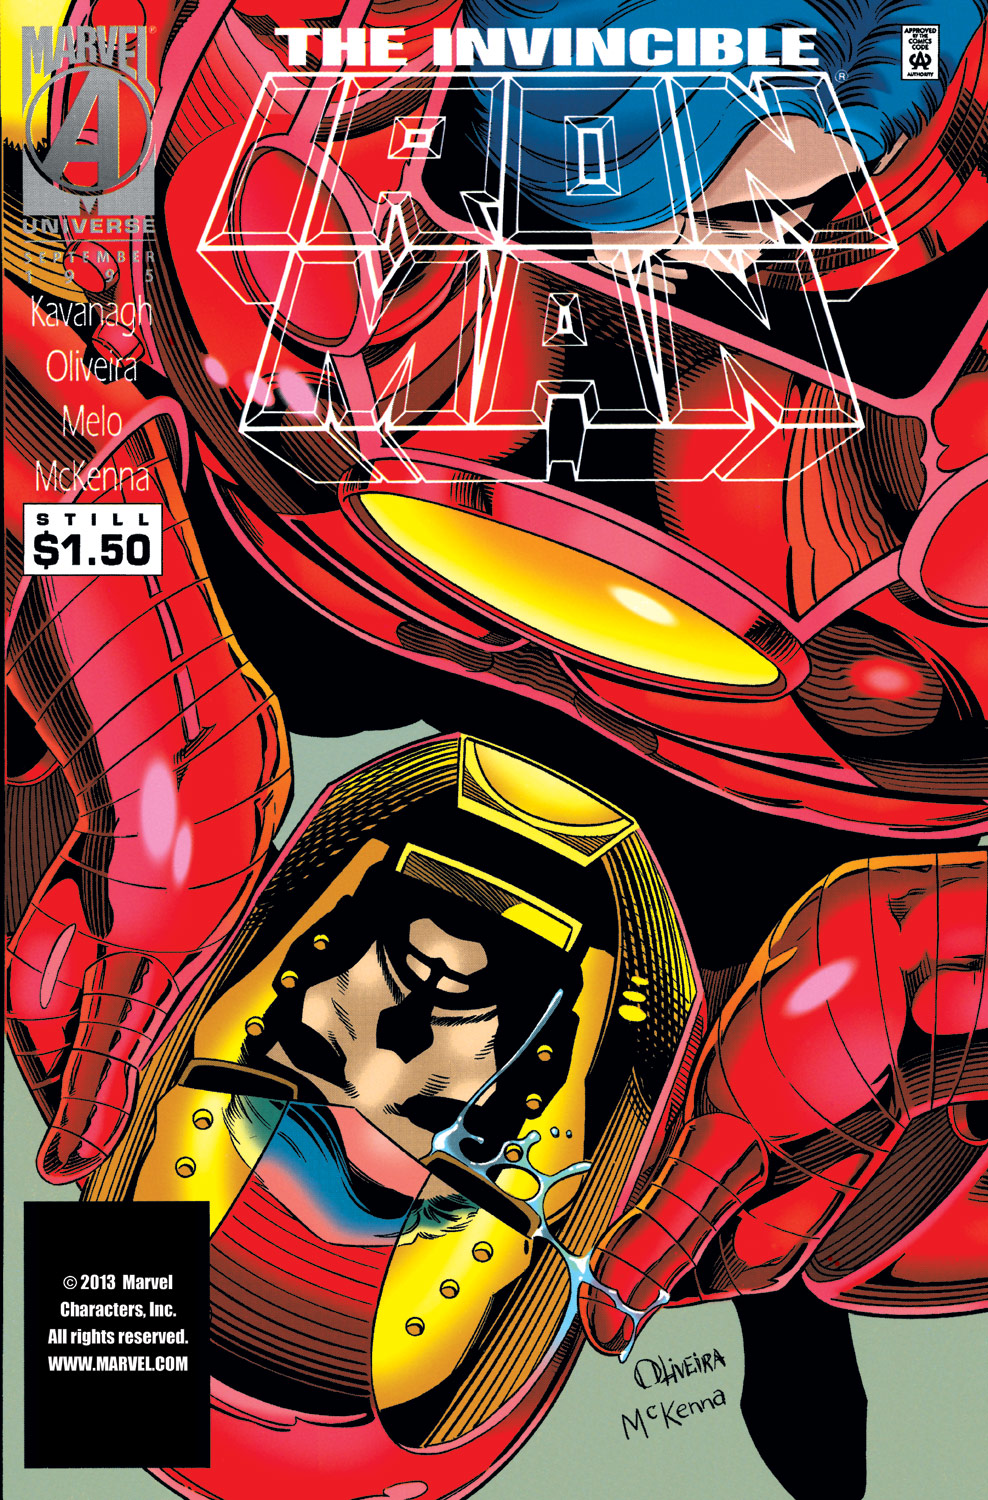 Iron Man (1968) #320